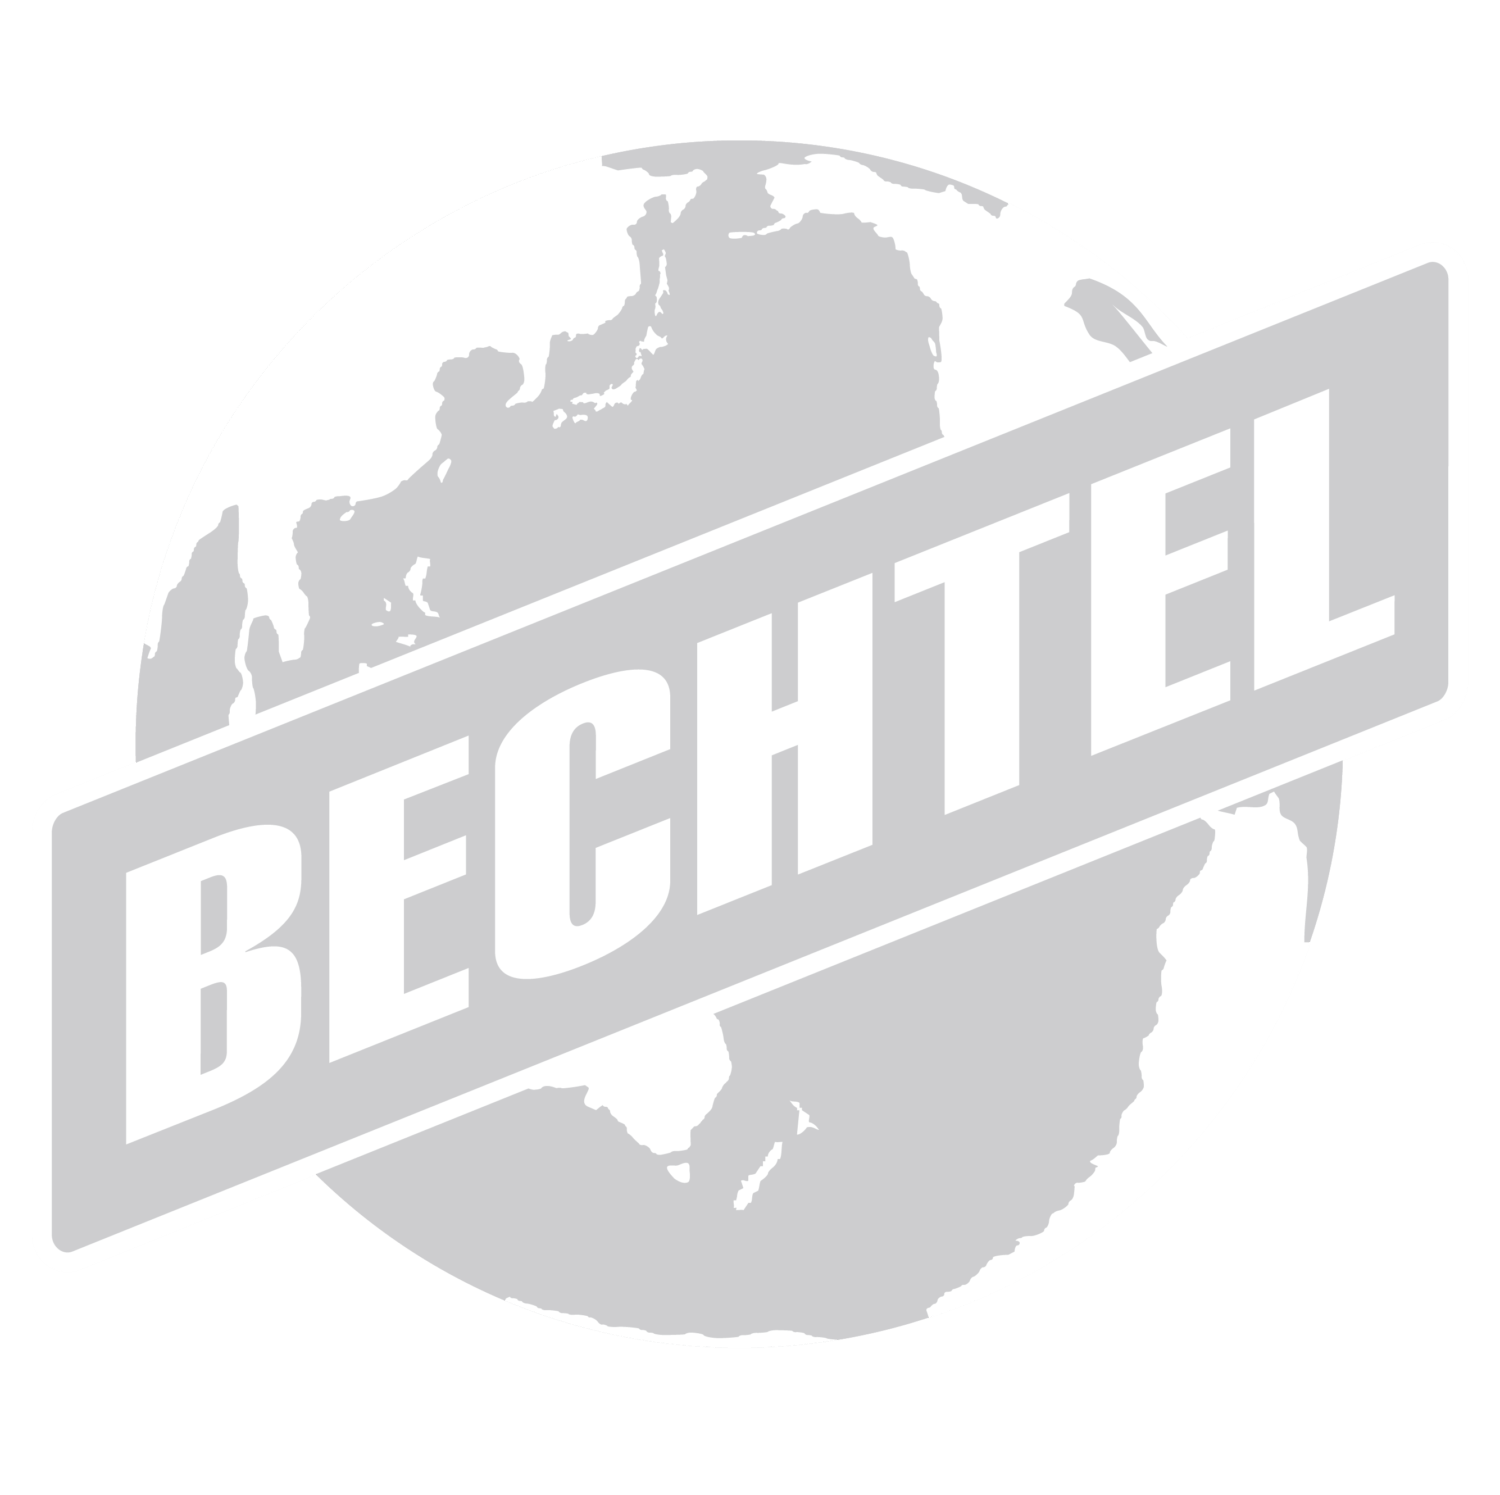 Bechtel Logo - Industrial | Launch Media | Industrial Video Production Company